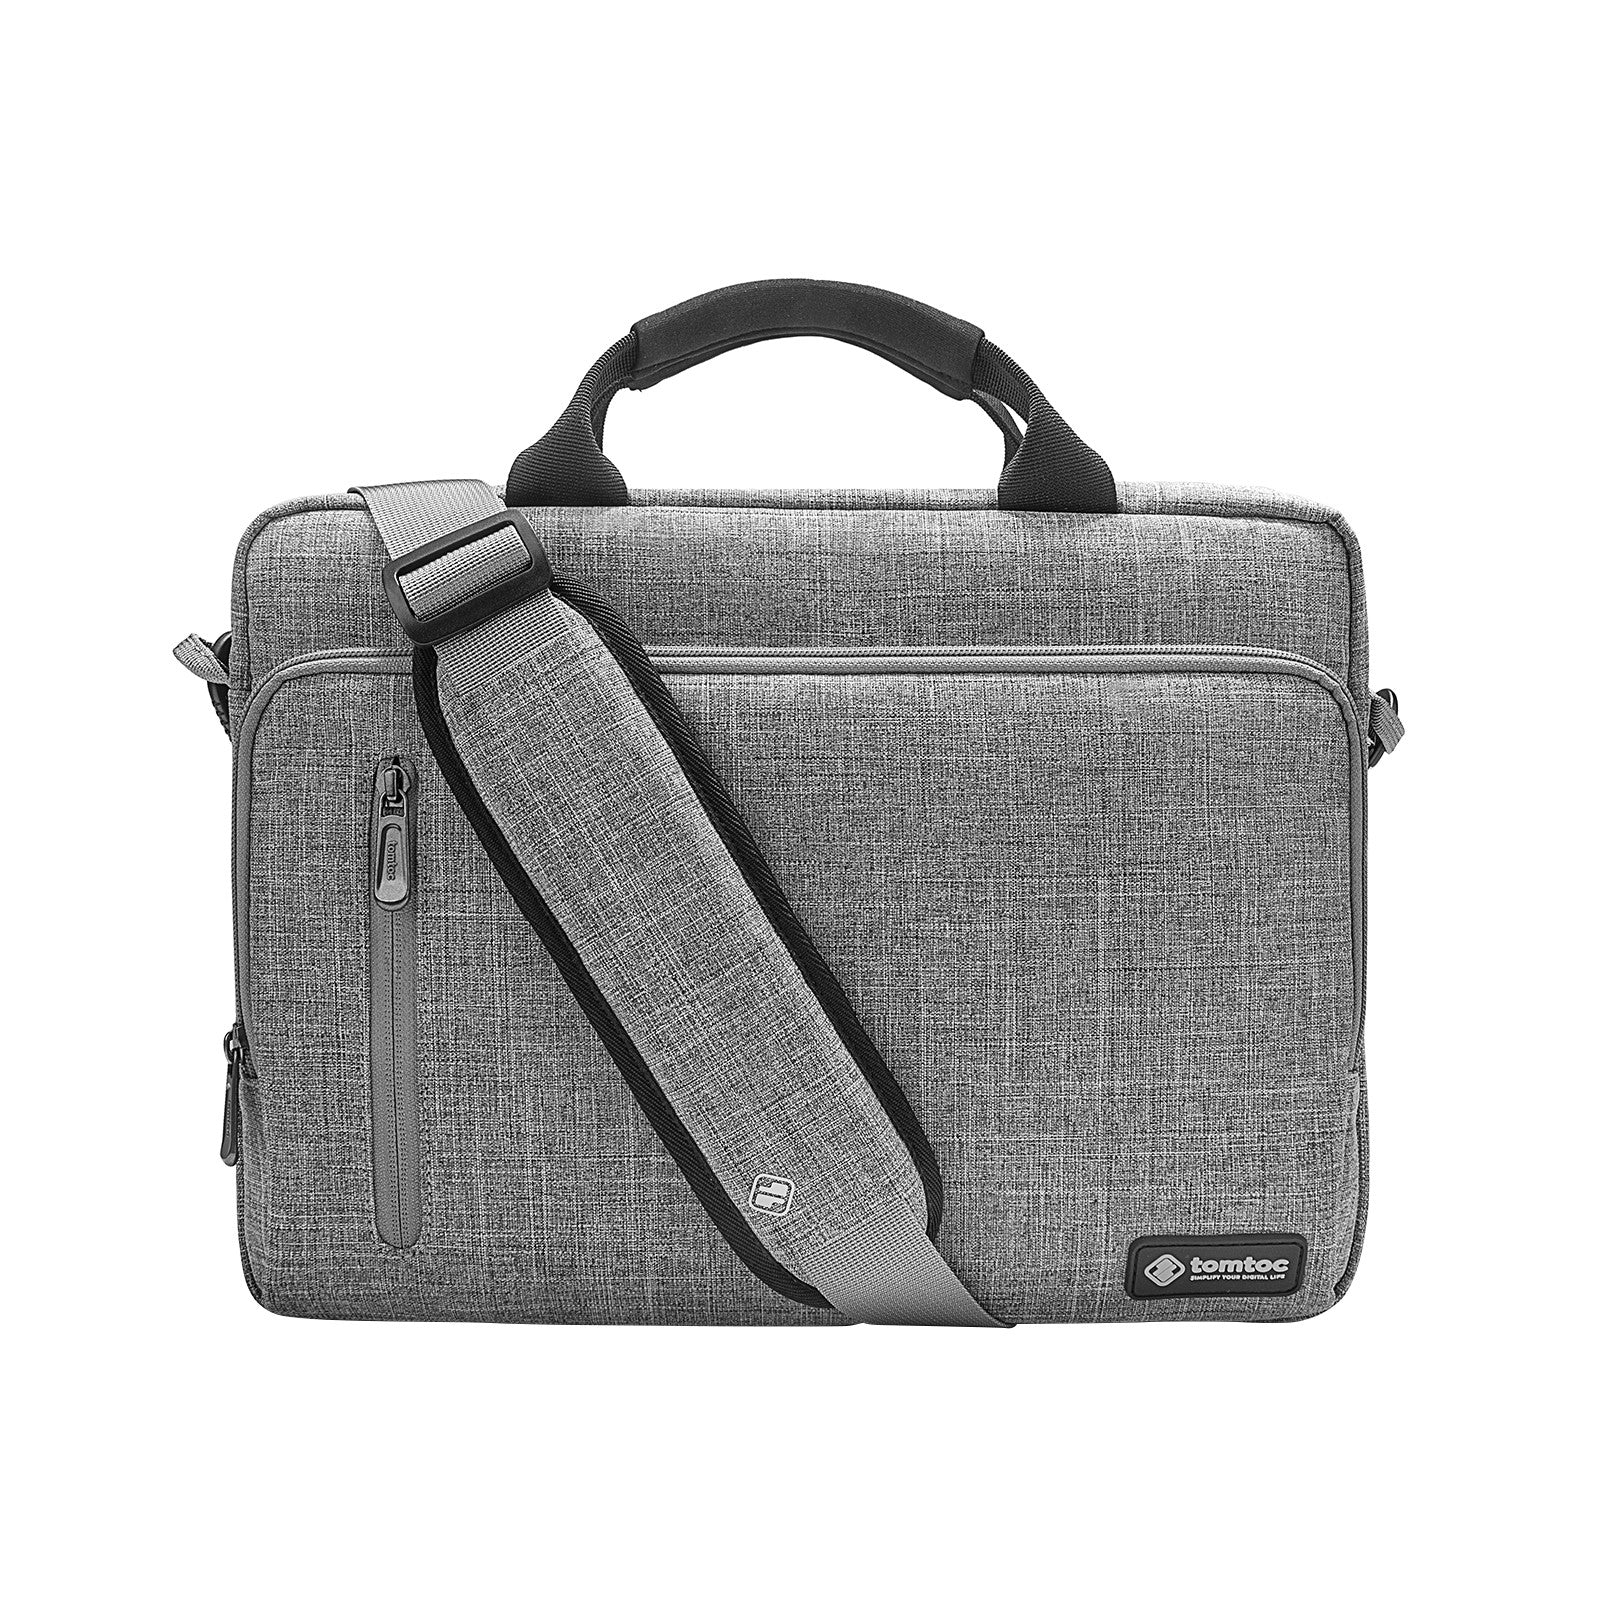 tomtoc Laptop Messenger Bag, Multi-Functional Shoulder Bag Fits Up to 16  inch MacBook Pro, Durable W…See more tomtoc Laptop Messenger Bag